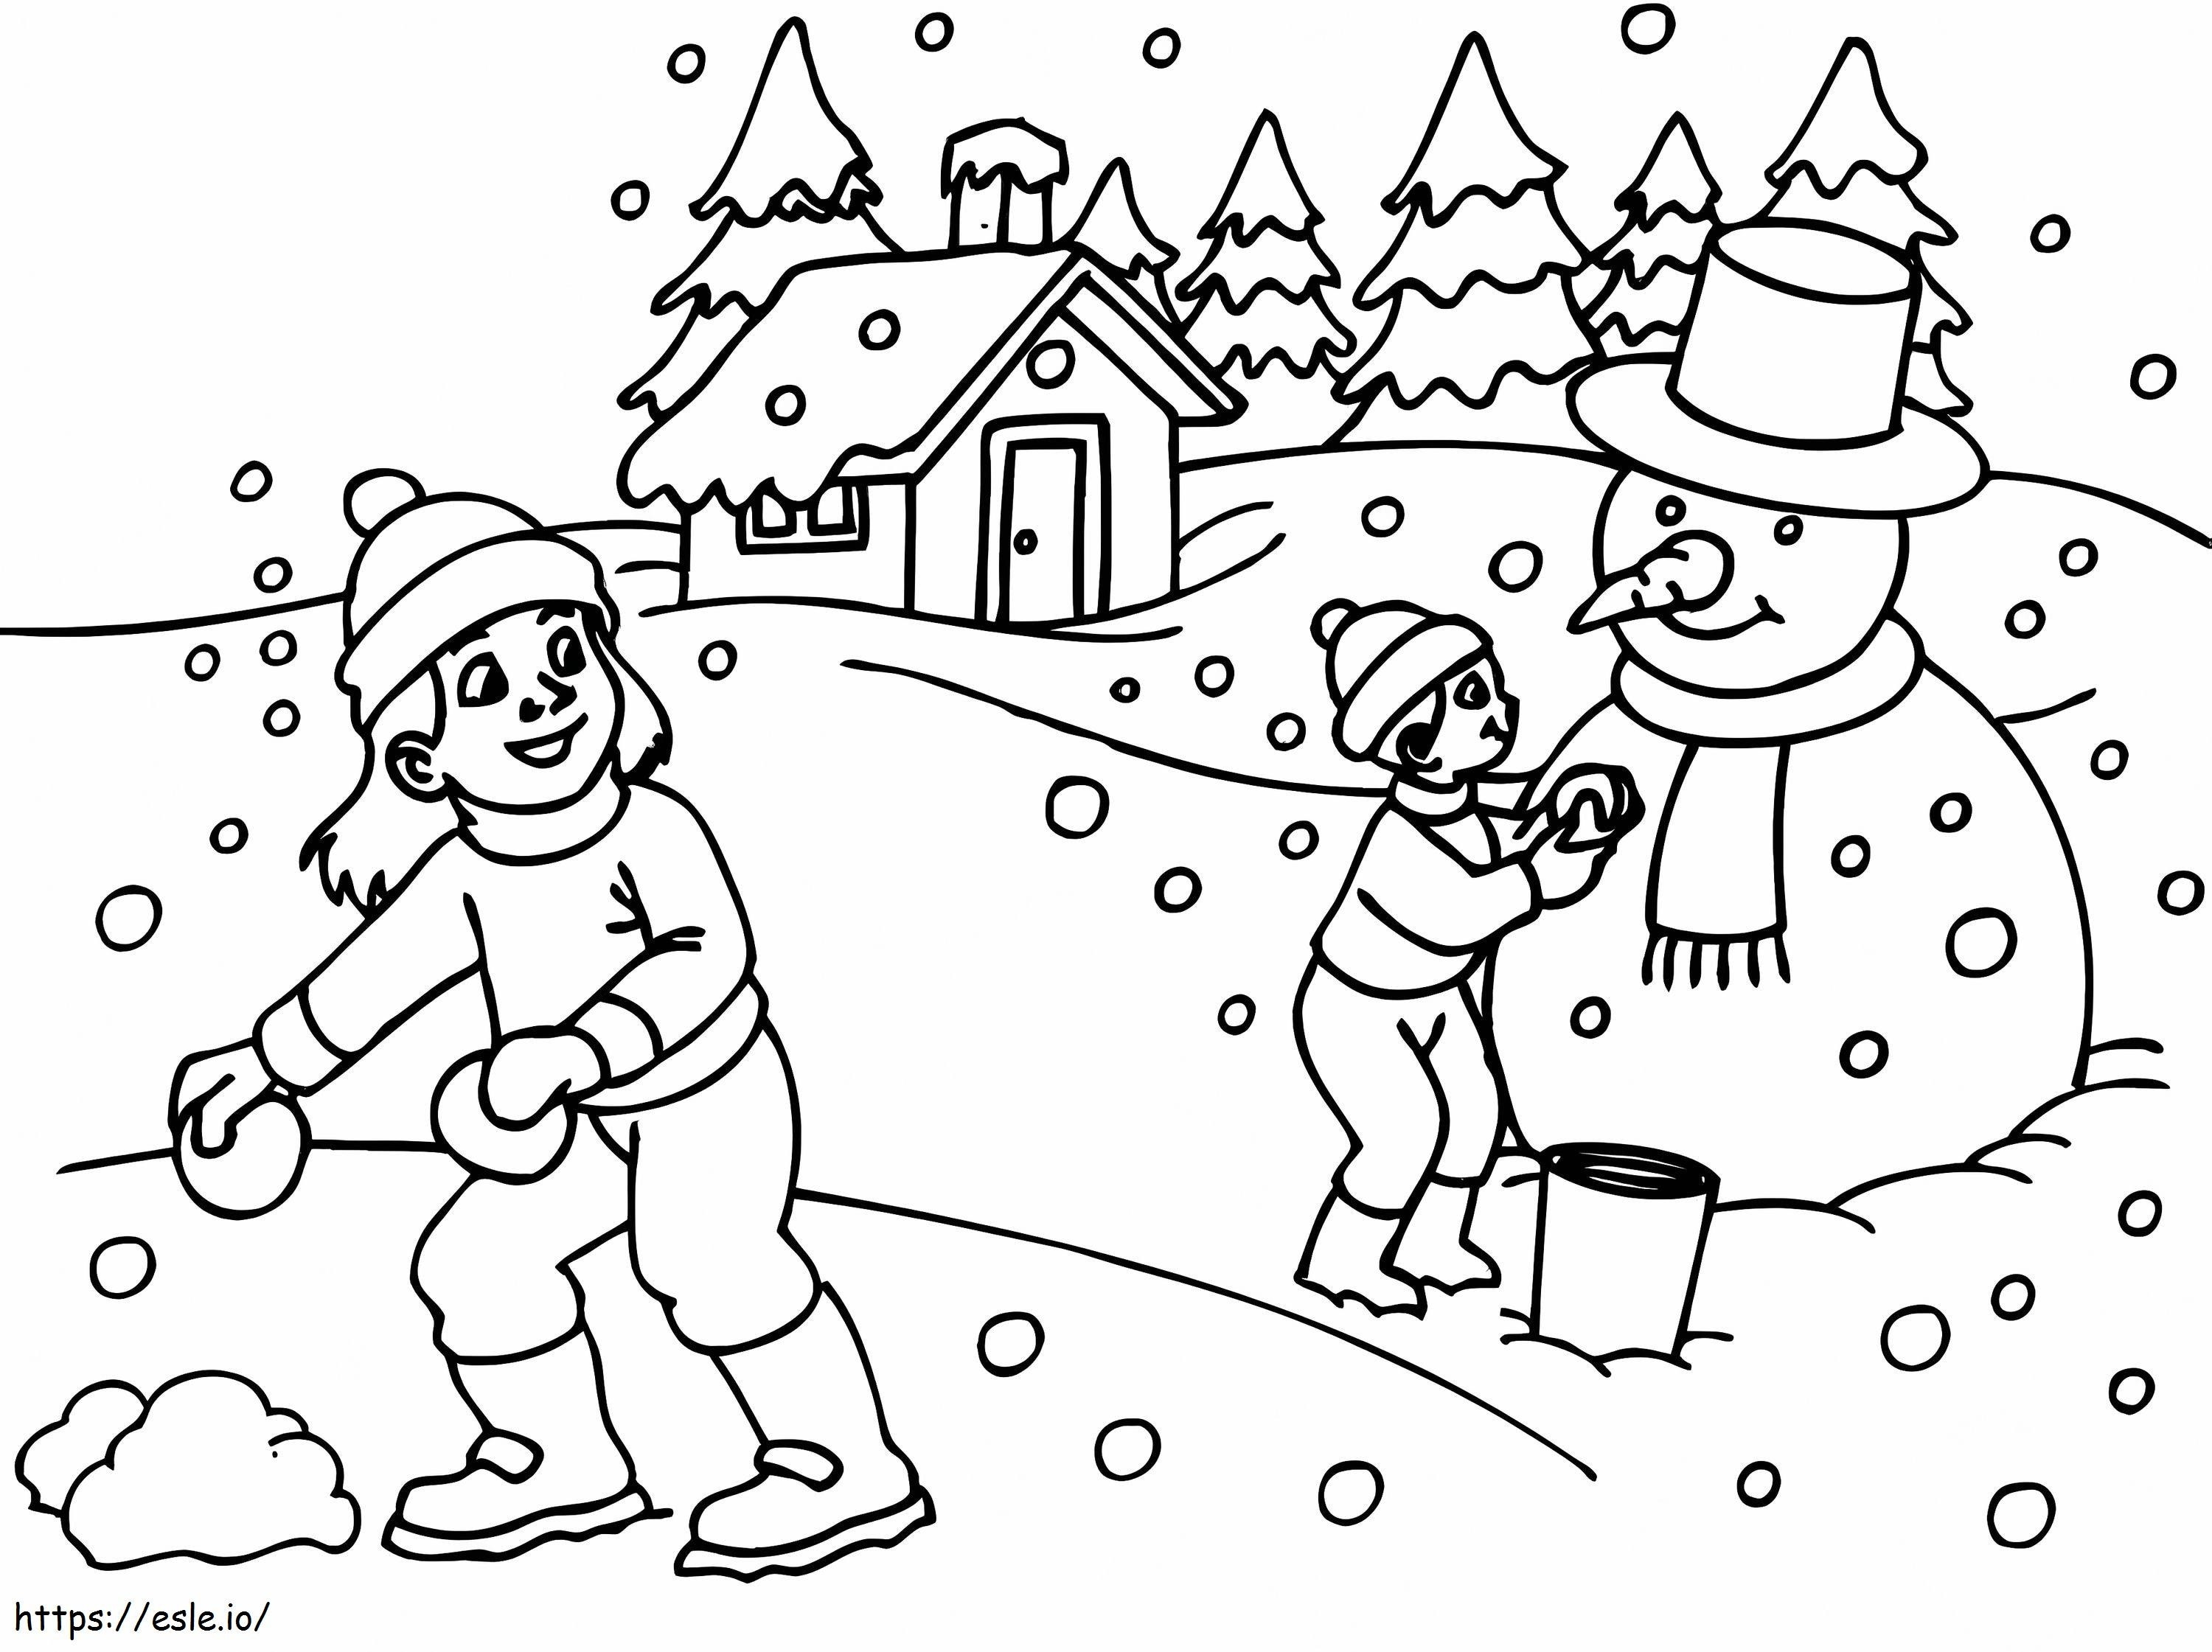 Winter Scene 2 coloring page